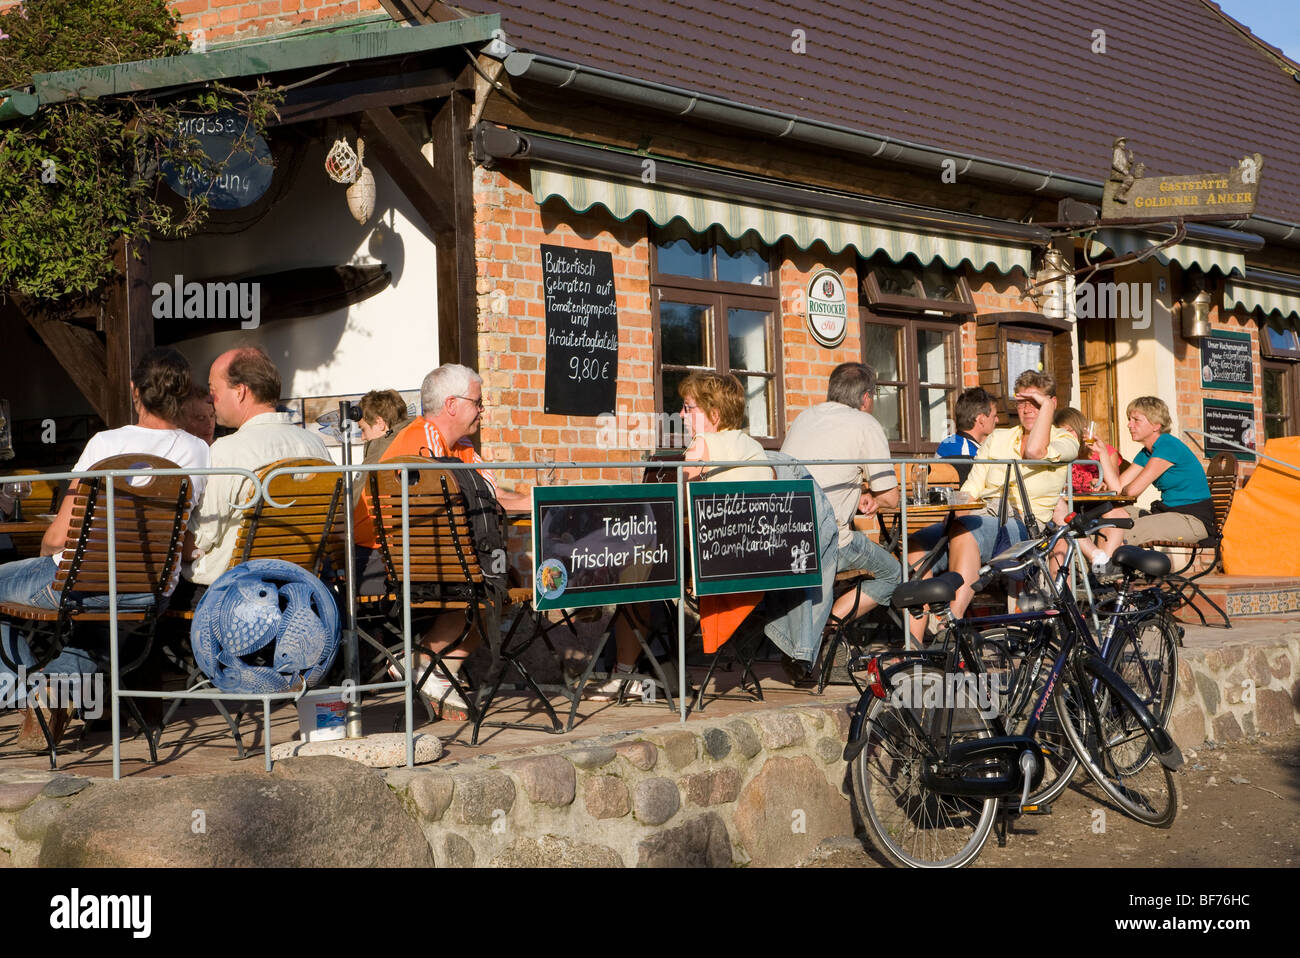 People at restaurant Goldener Anker in Vitt, Kap Arkona, Rugen island, Mecklenburg-Western Pomerania, Germany Stock Photo